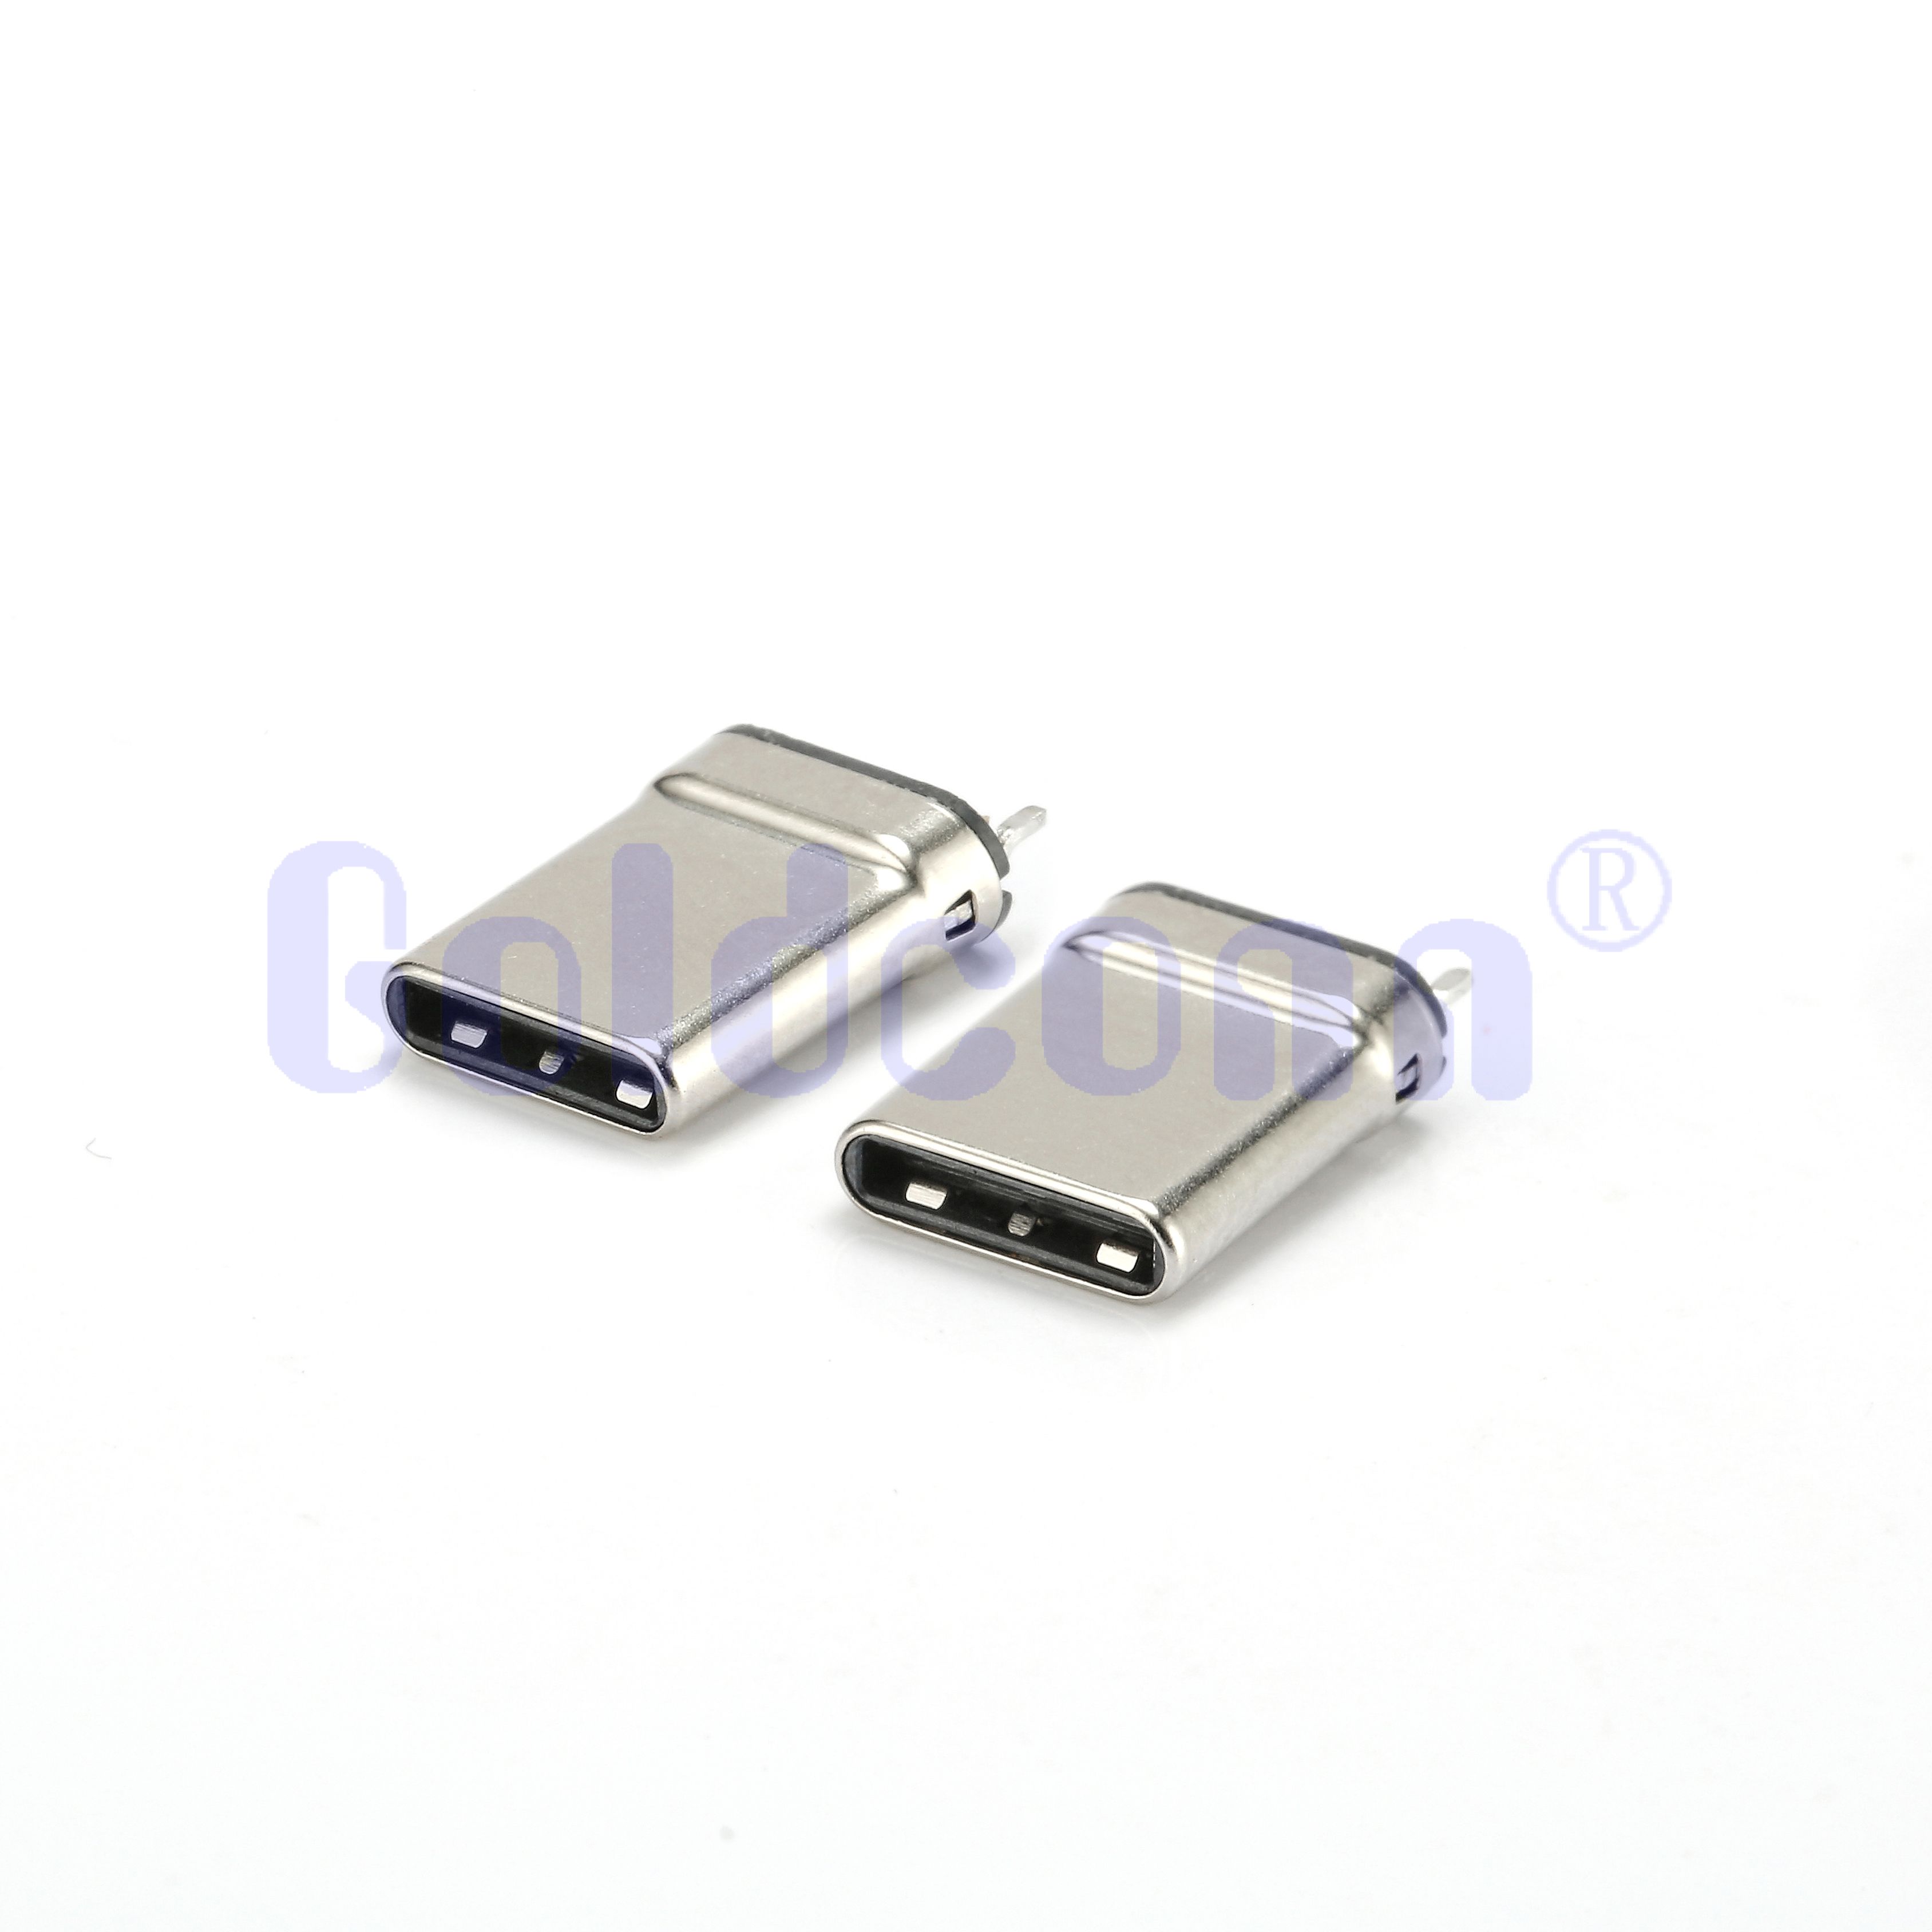 CM090-24LB01U-97 TIPO C TID USB USB 24 pin Conector masculino, férula, estiramiento